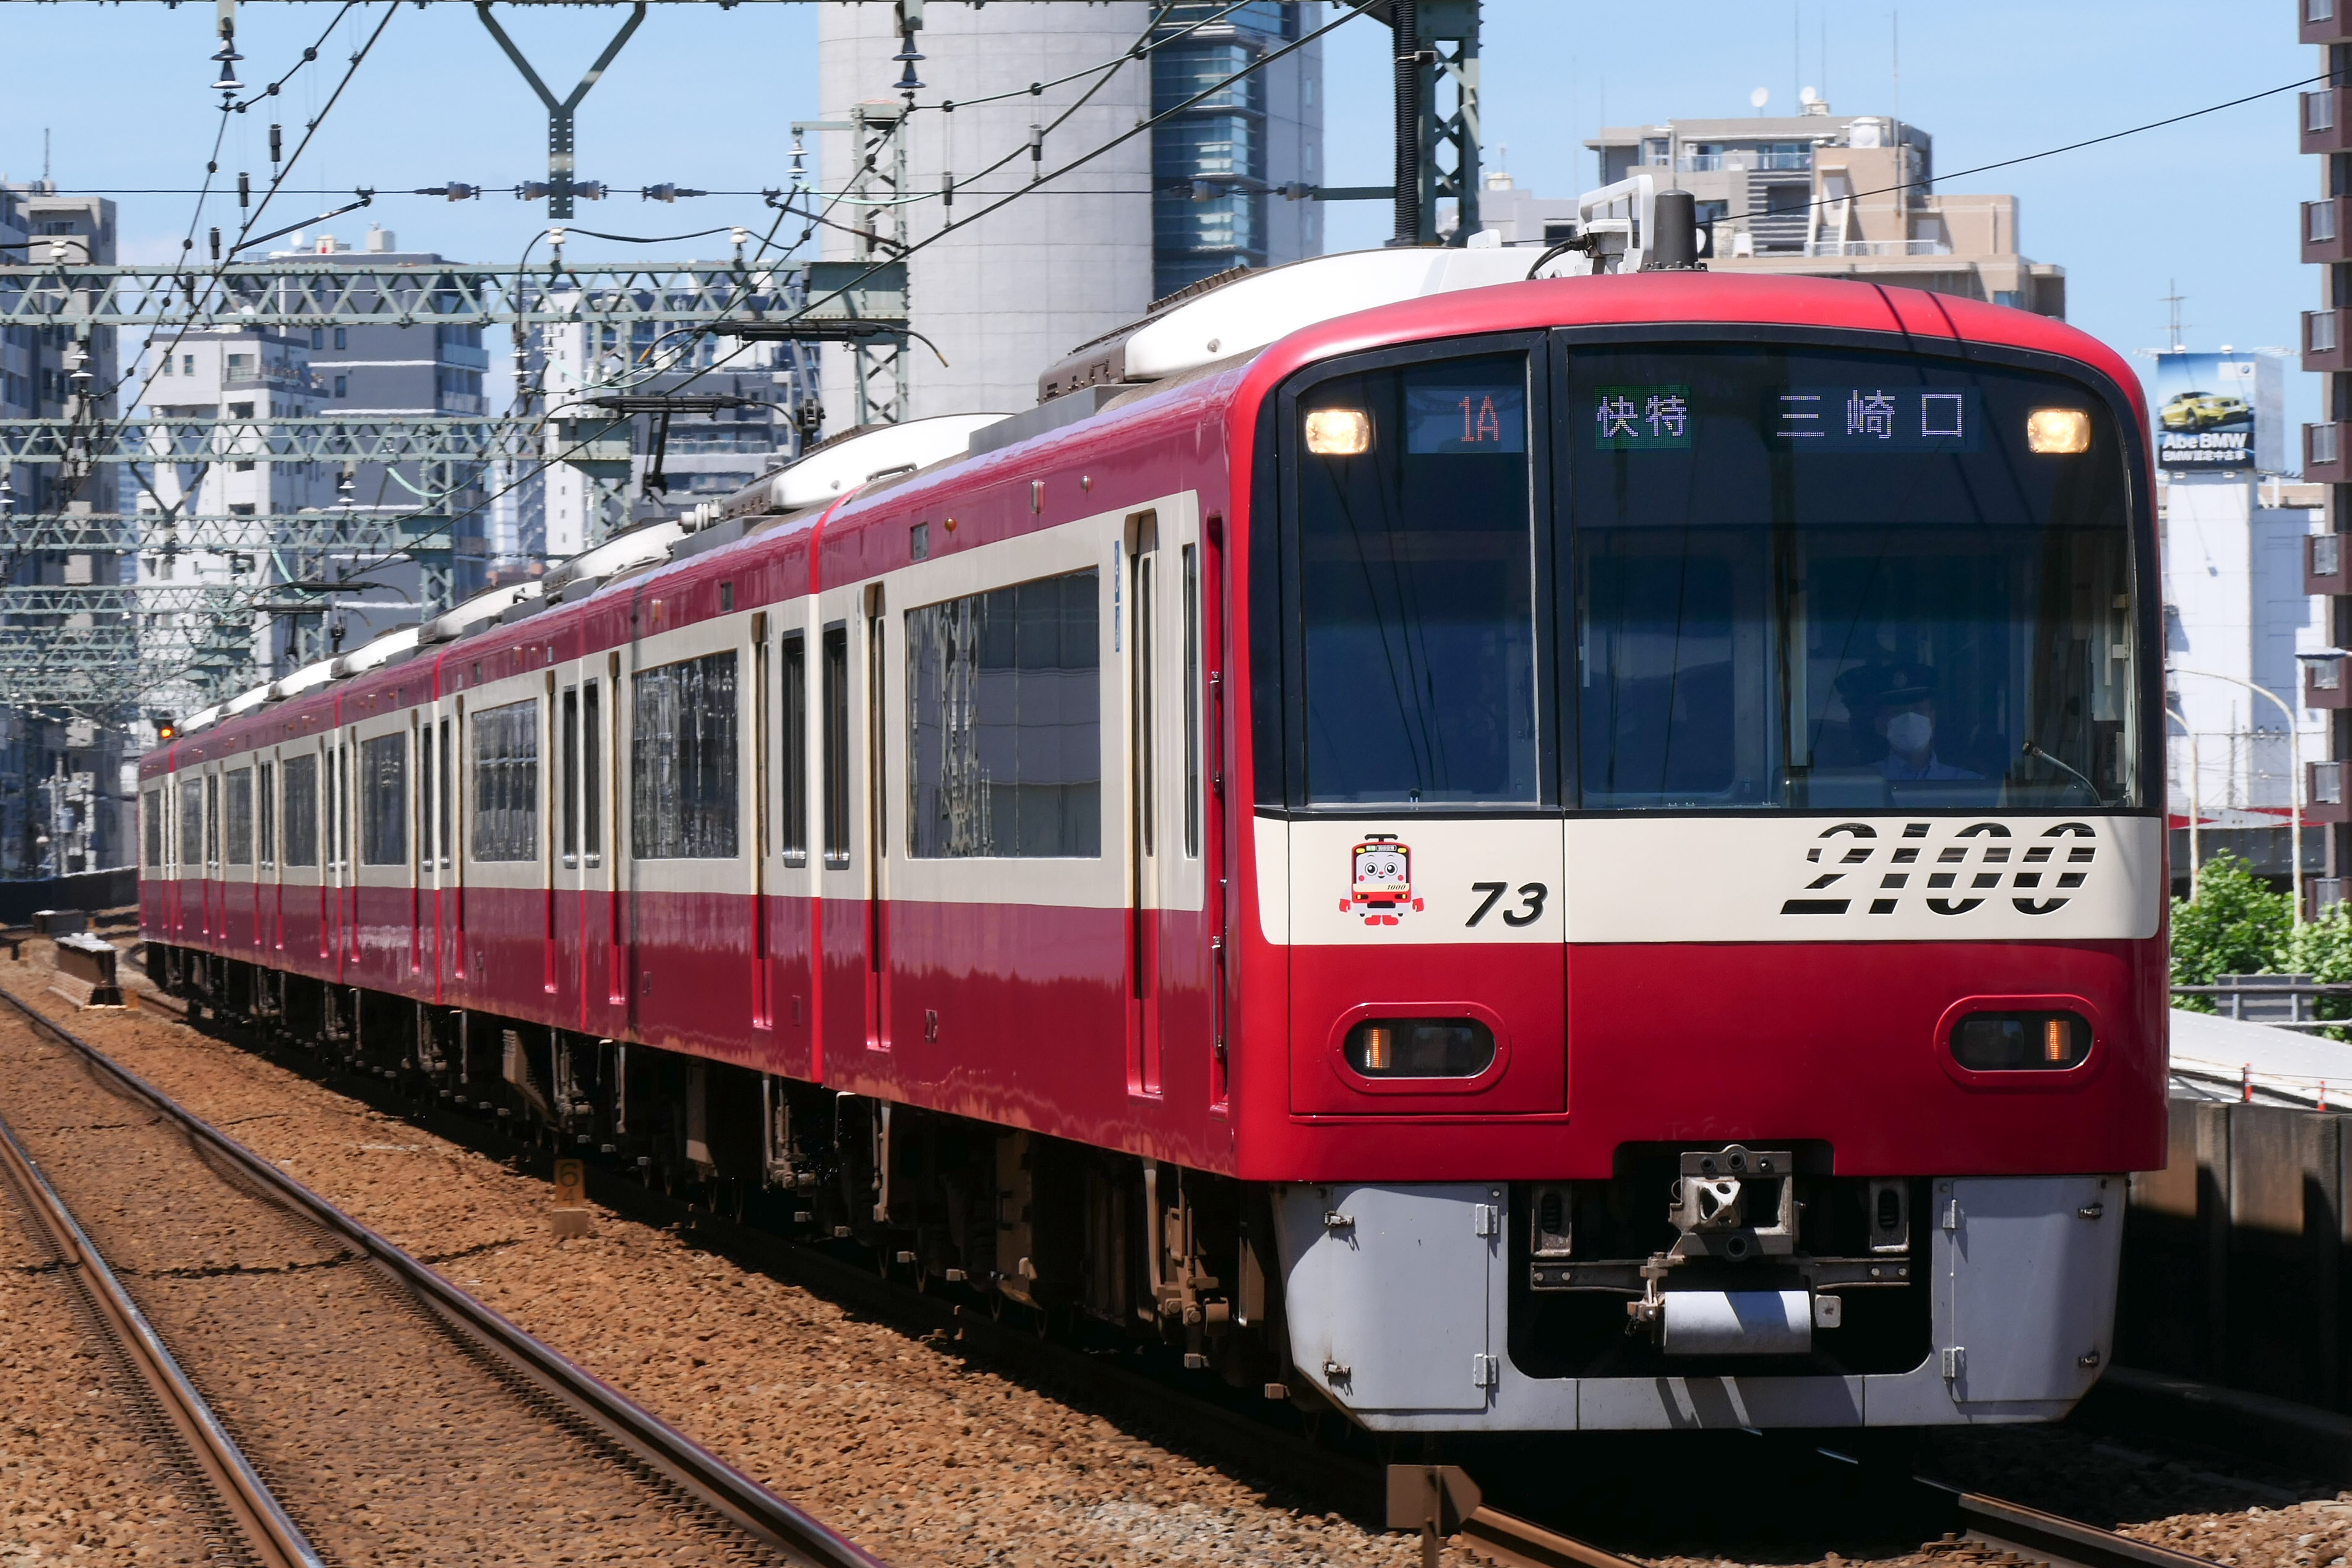 京急2100形電車 - Wikipedia